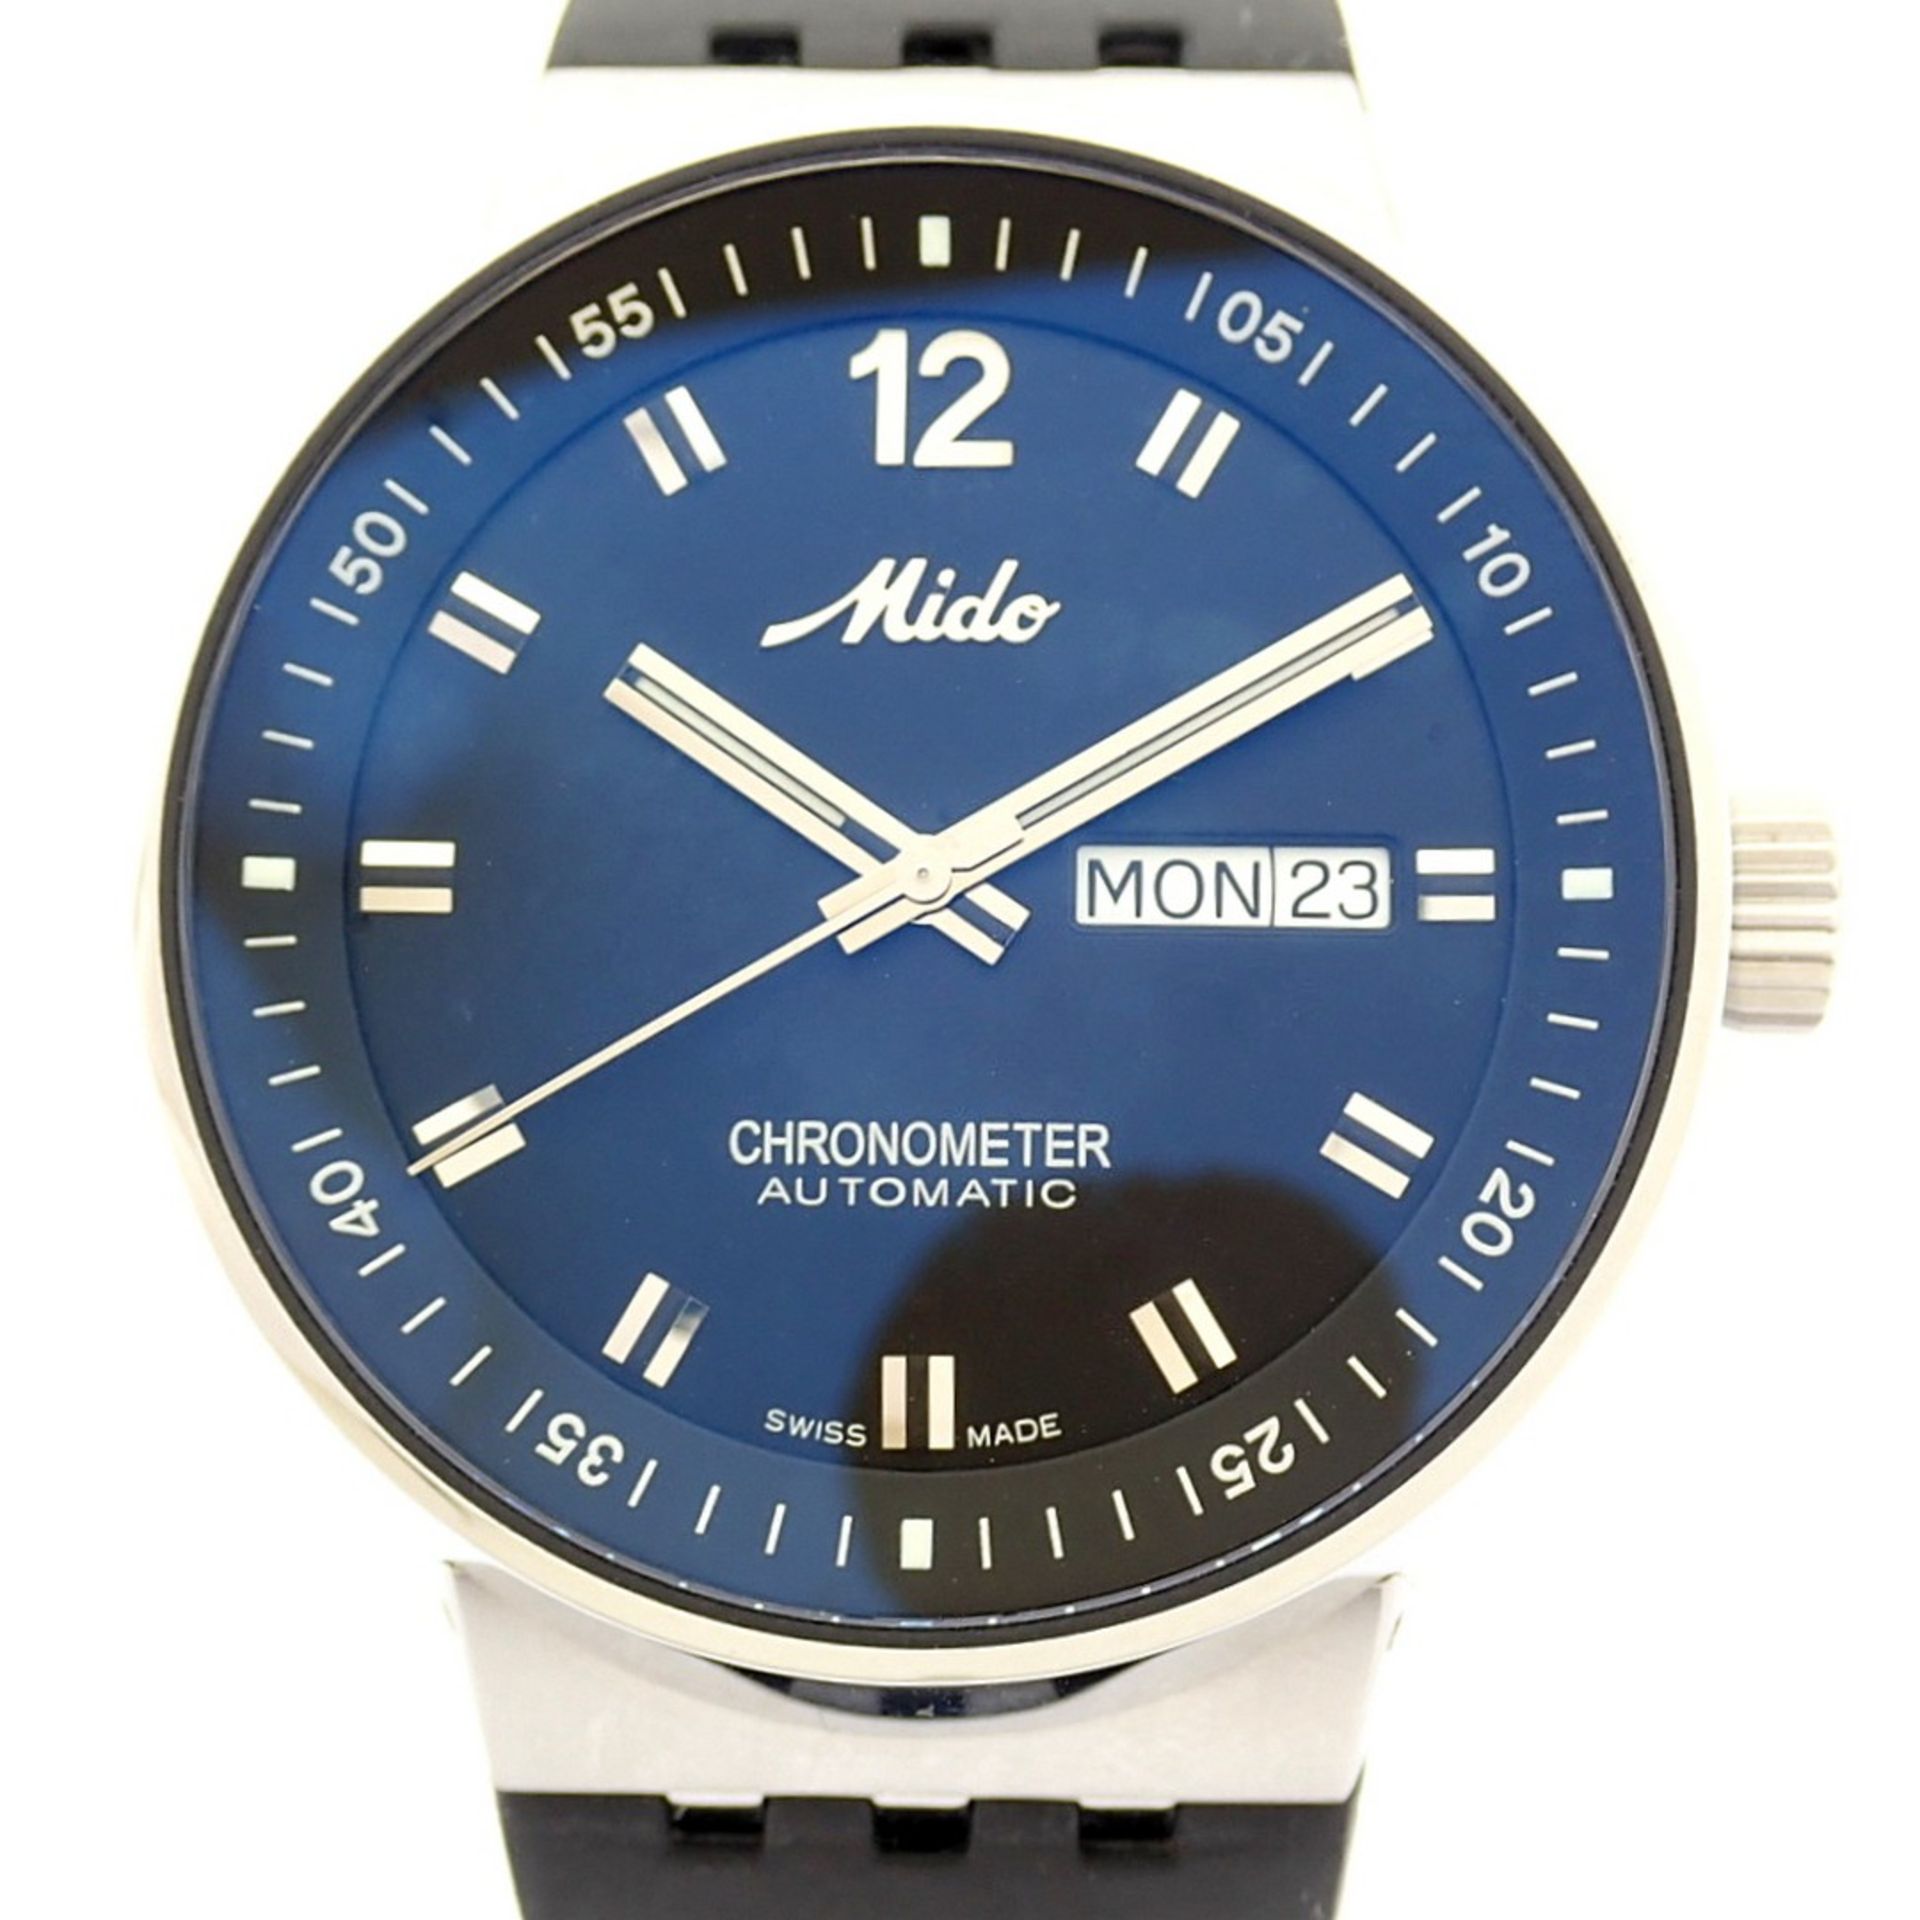 Mido / All Dial Day Date Choronometer Automatic Transparent (Unworn) - Gentlmen's Steel Wrist Watch - Image 3 of 14